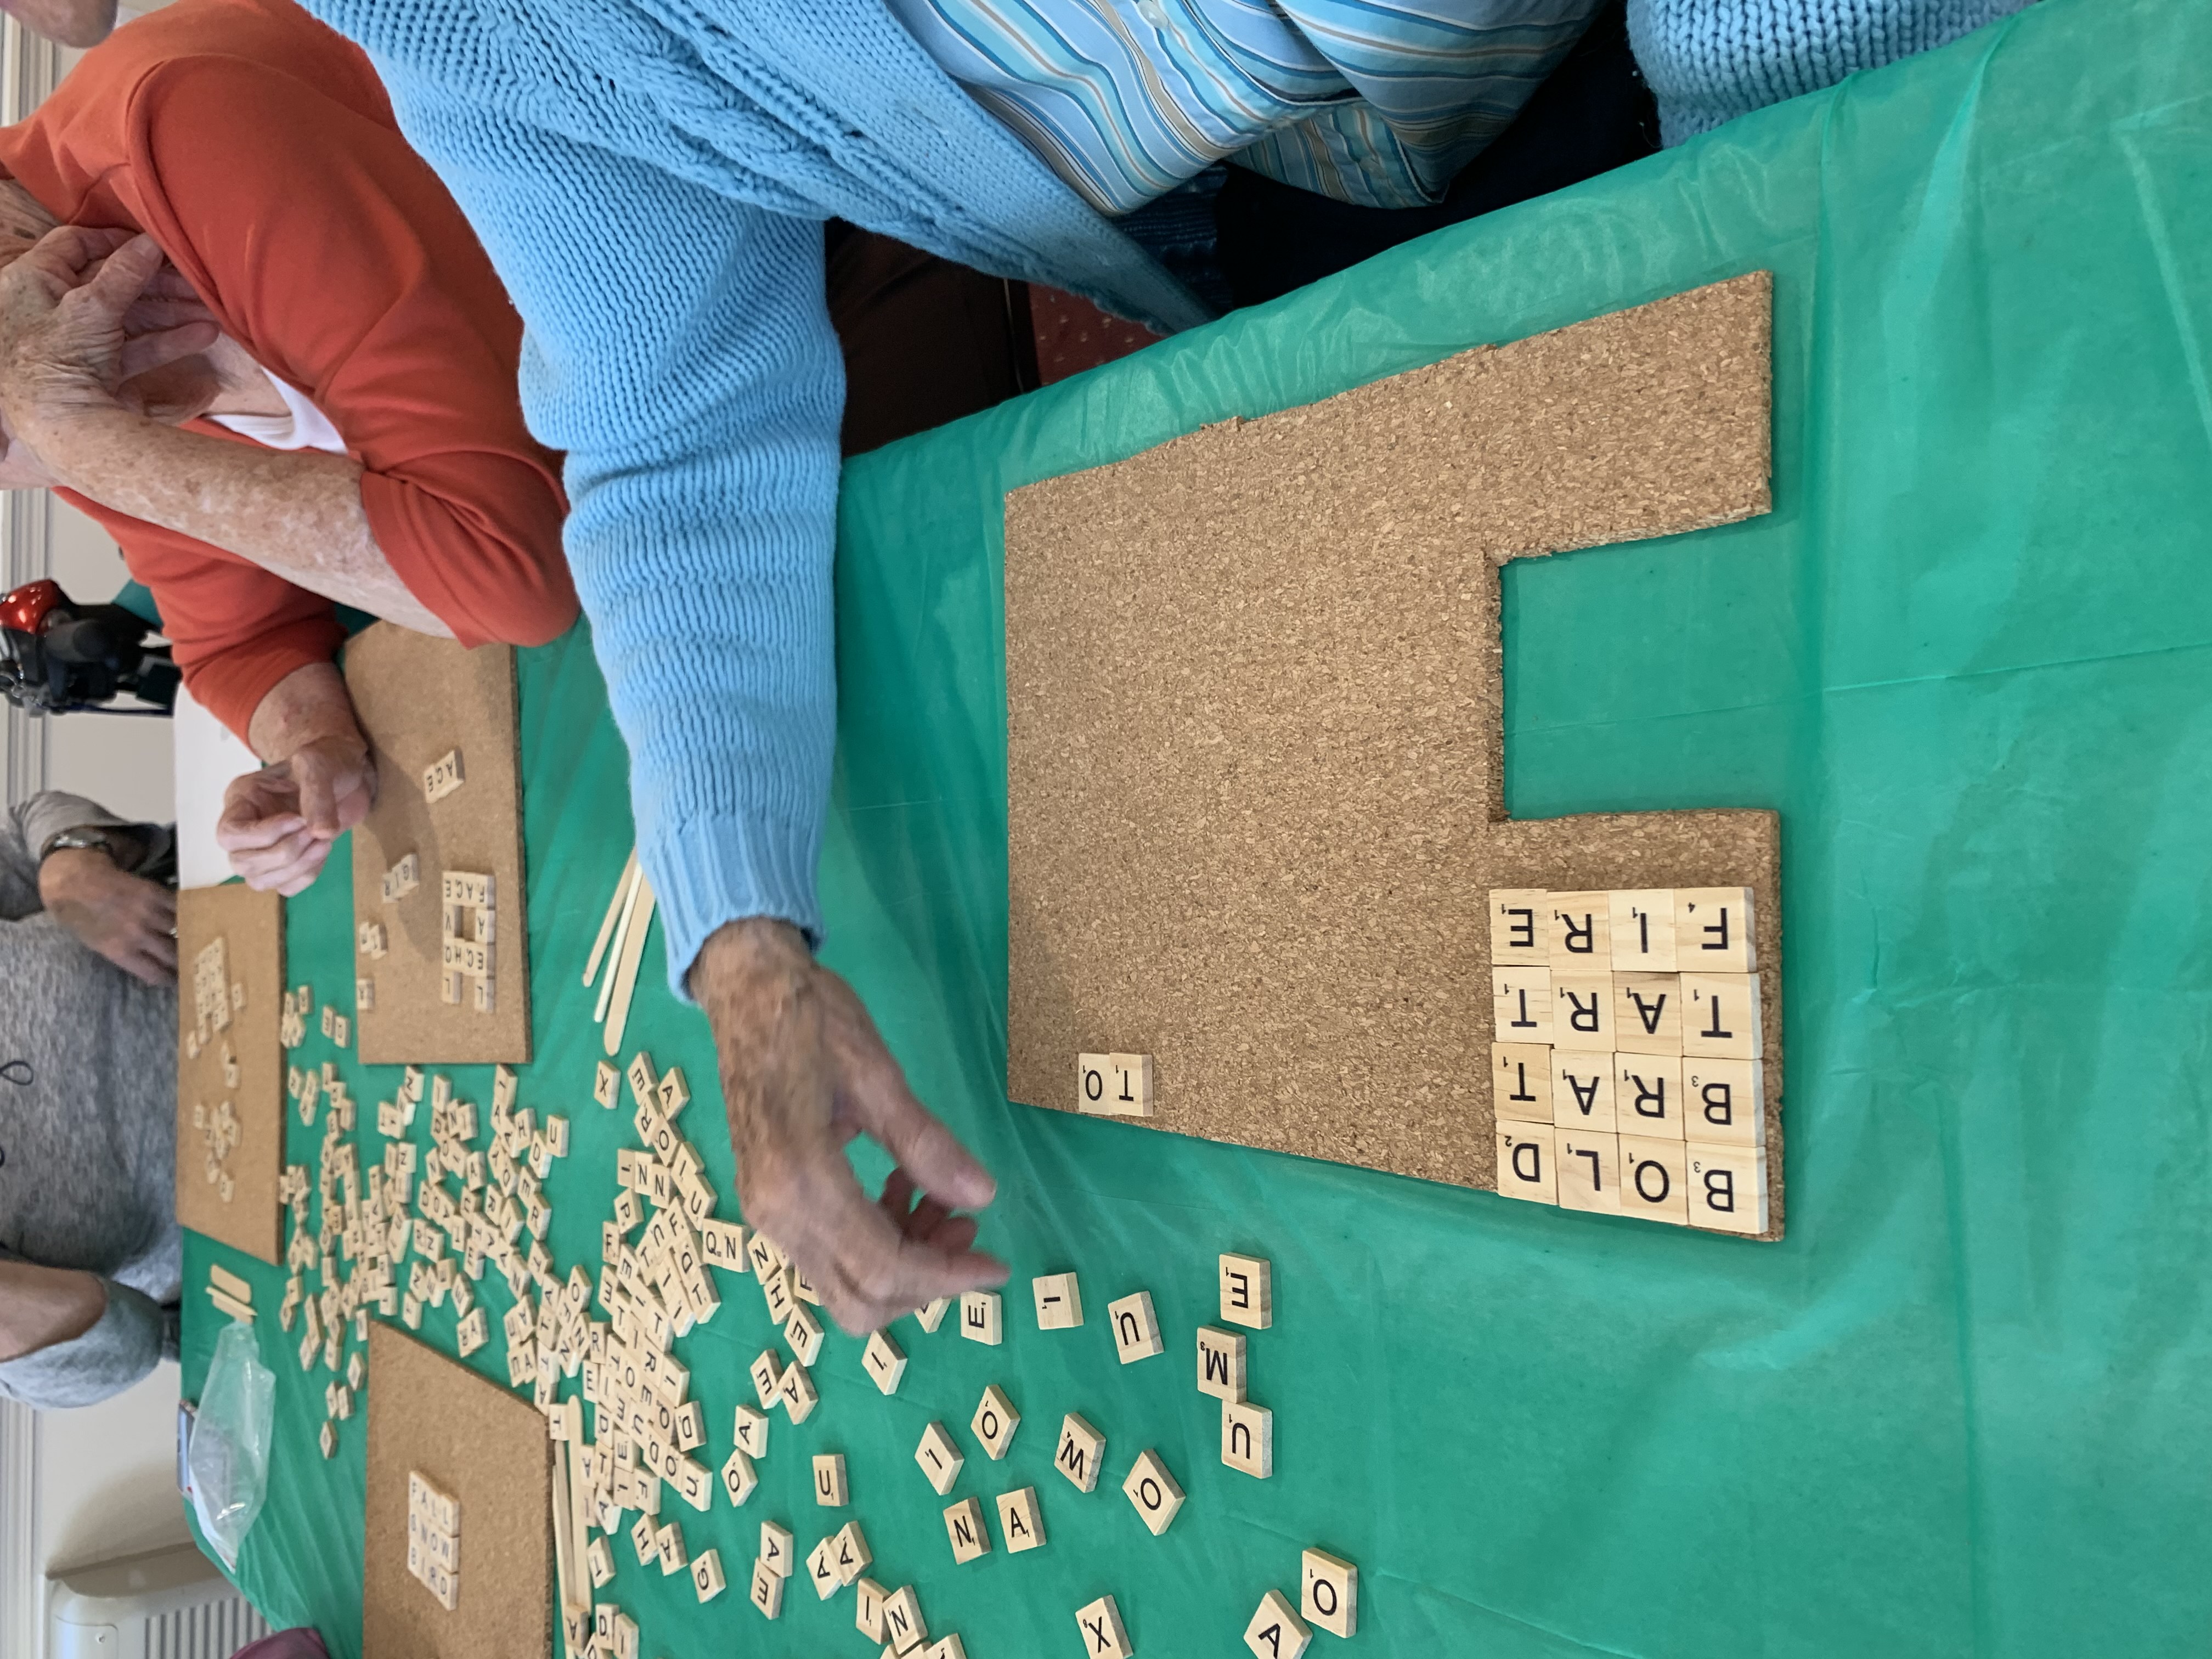 Scrabble tile coaster